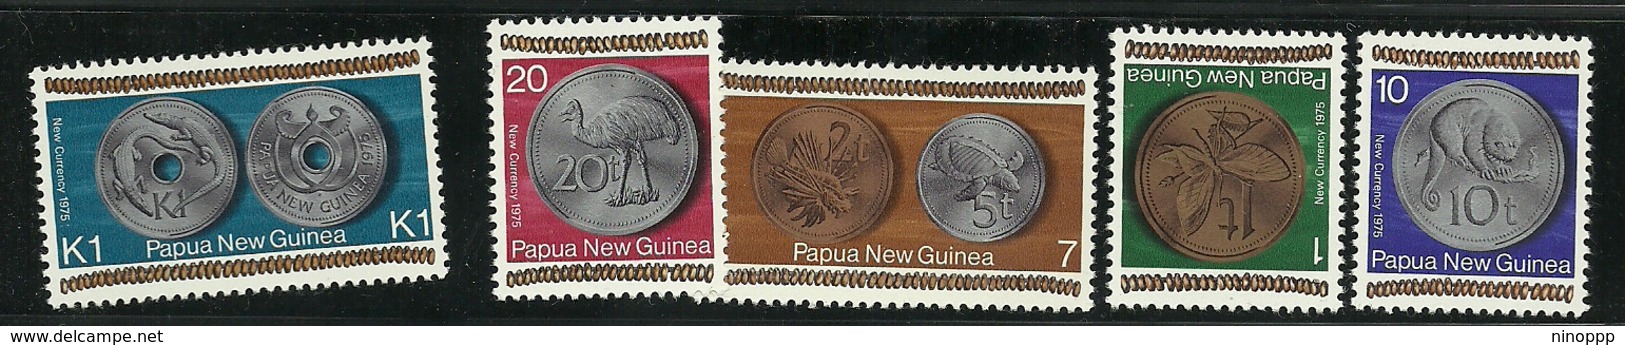 Papua New Guinea SG 281-285 1975 Coins MNH - Papua New Guinea